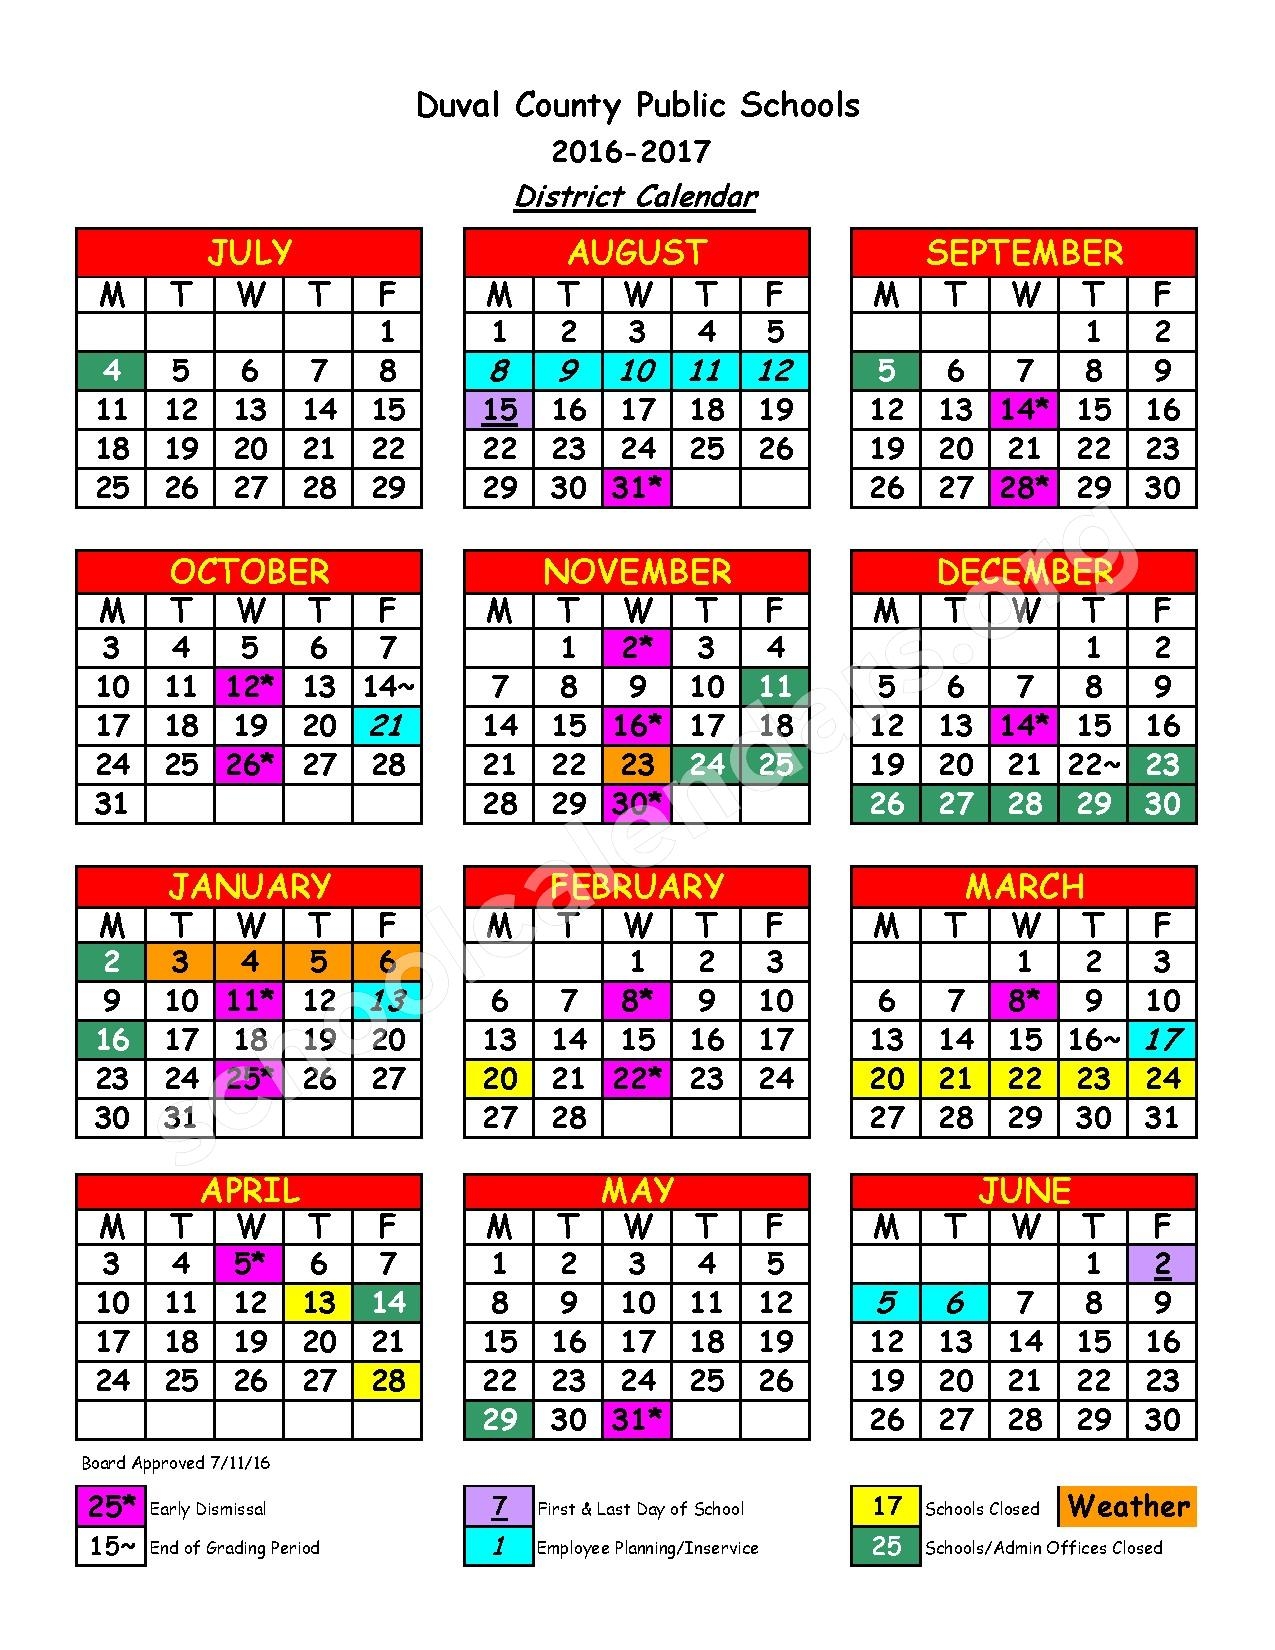 Duval County Schools Calendar Qualads